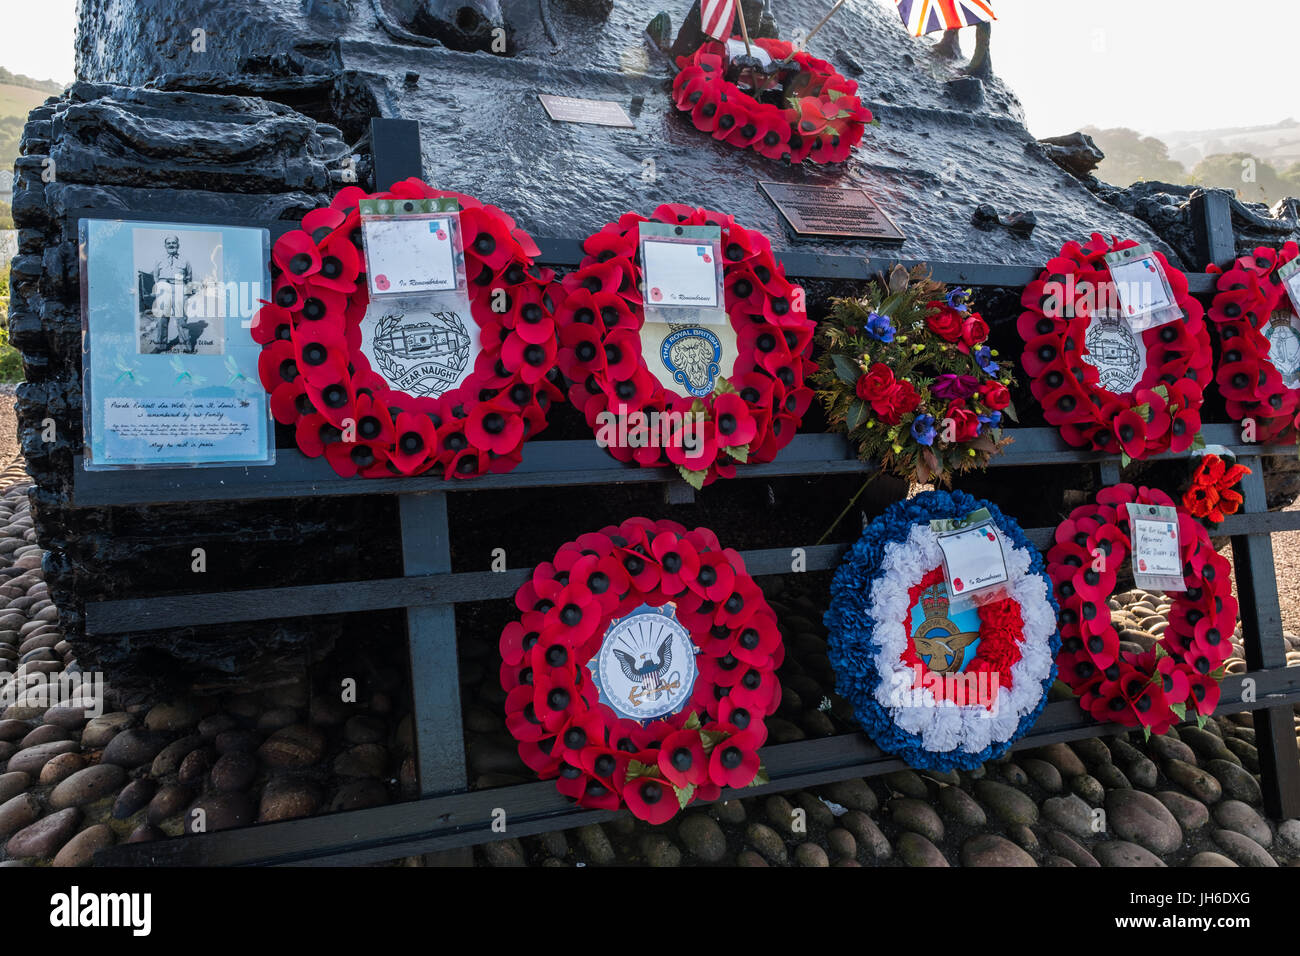 Operation Tiger Memorial at Slapton Sands, Torcross, South Hams, Devon, England, UK. Stock Photo